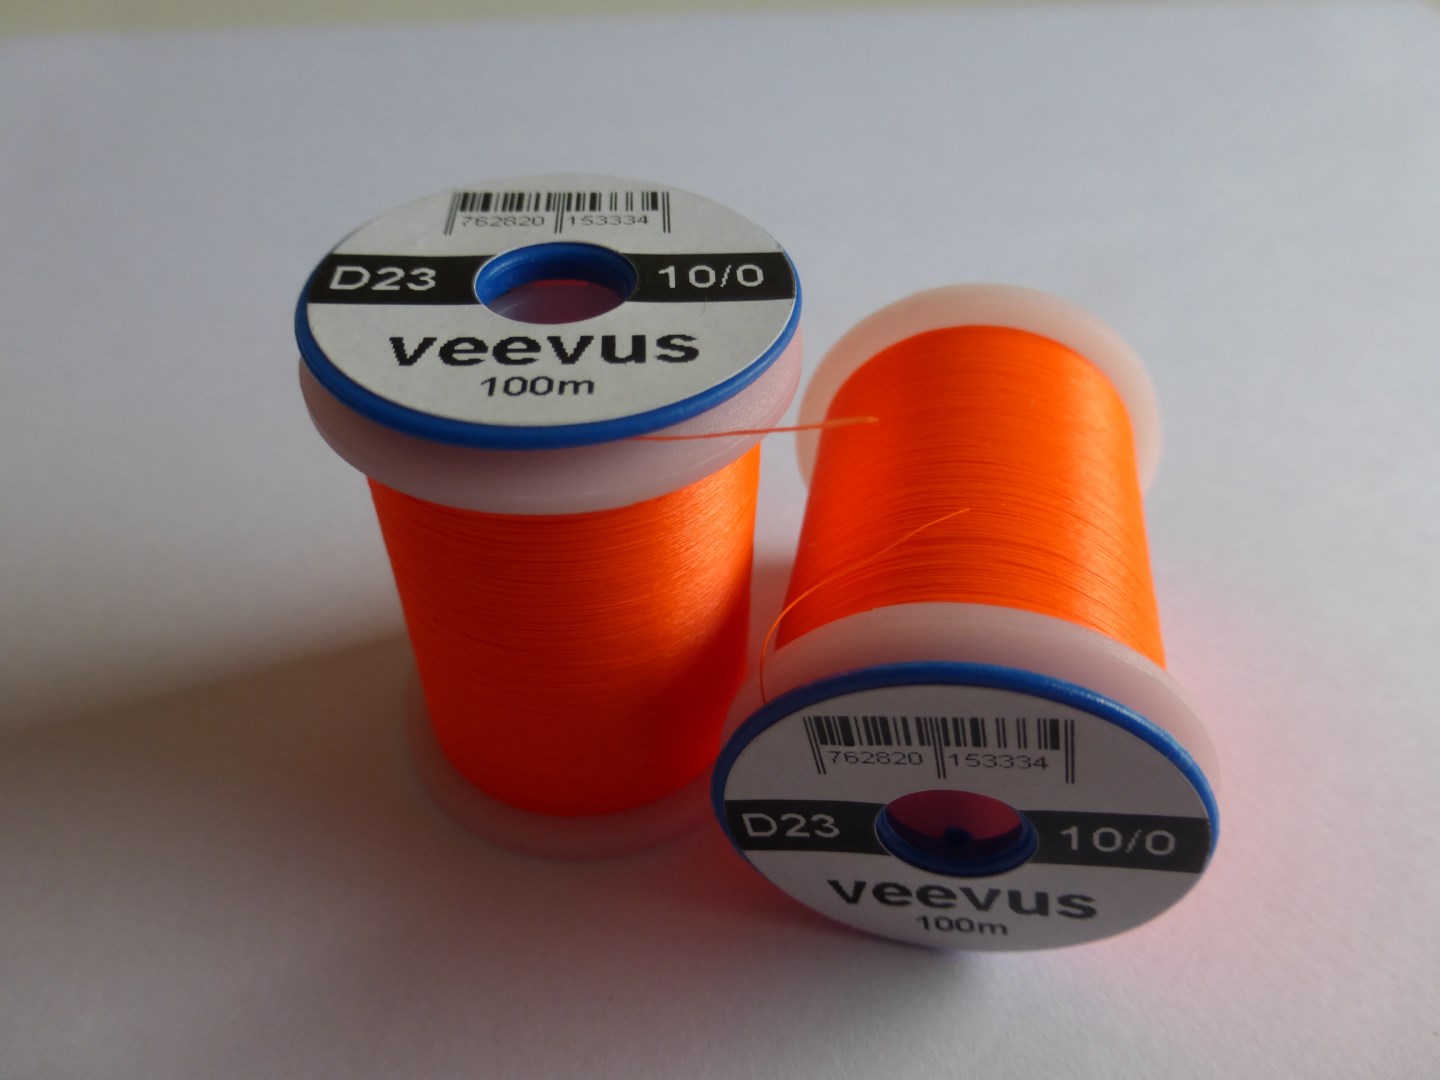 Veevus 10/0 Fluo Orange D23